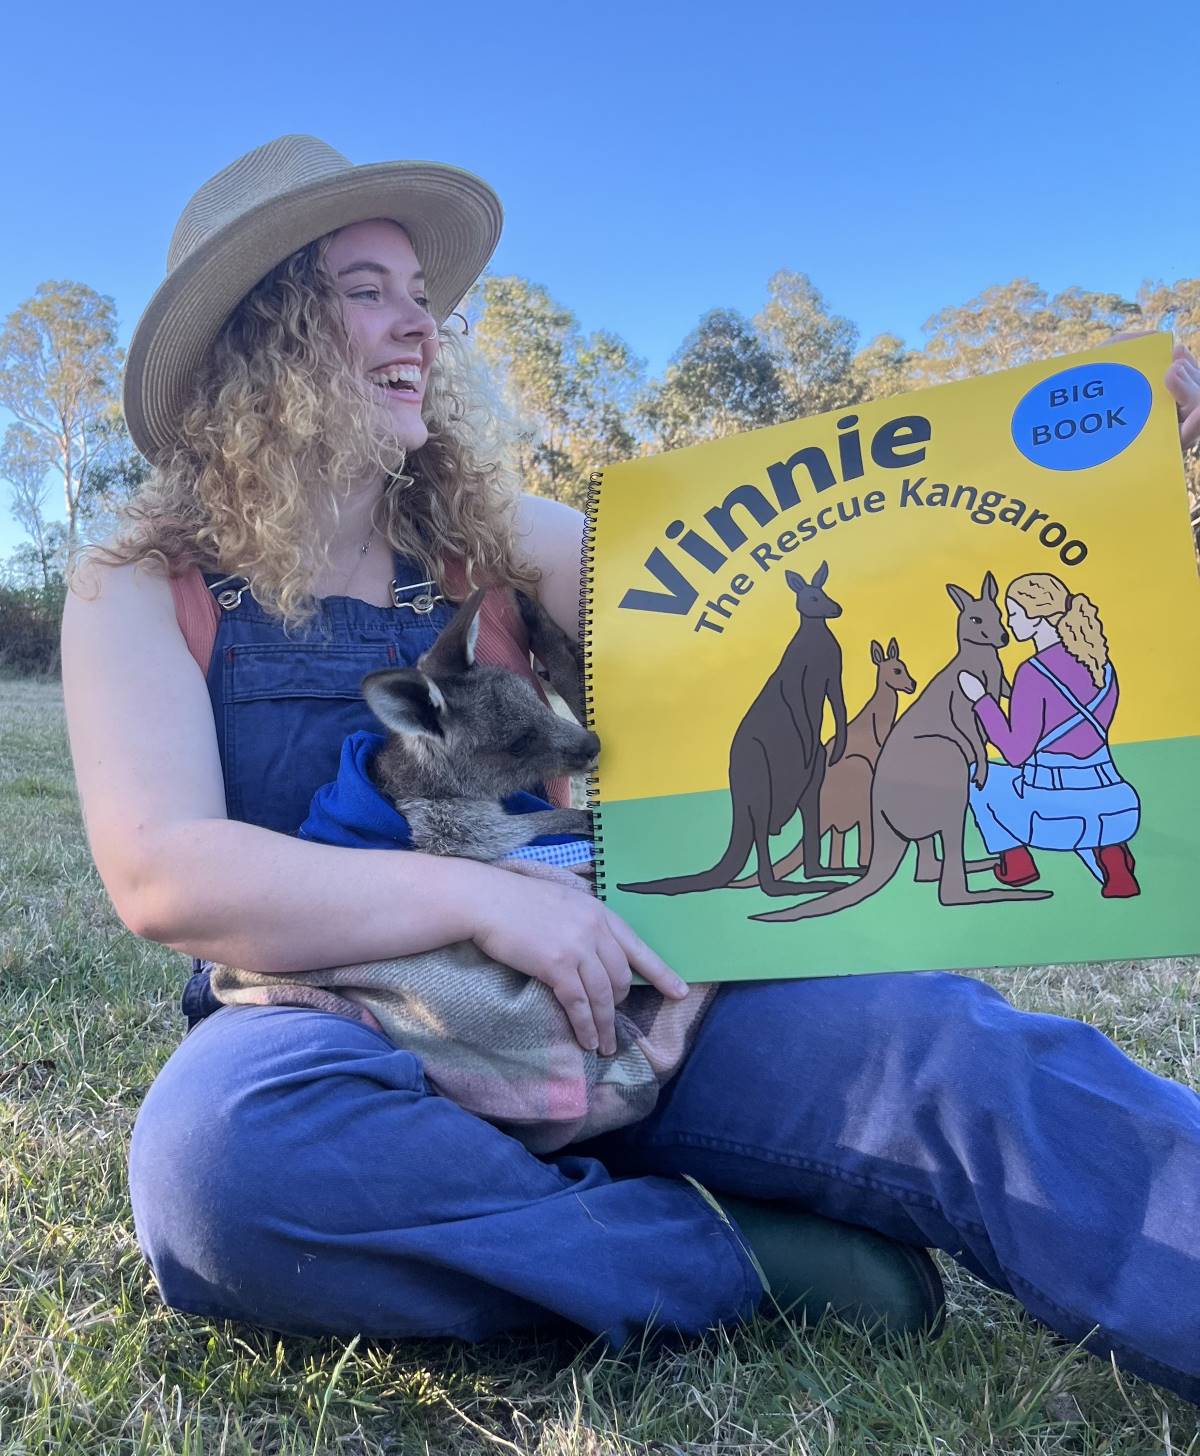 vinnie the rescue kangaroo book